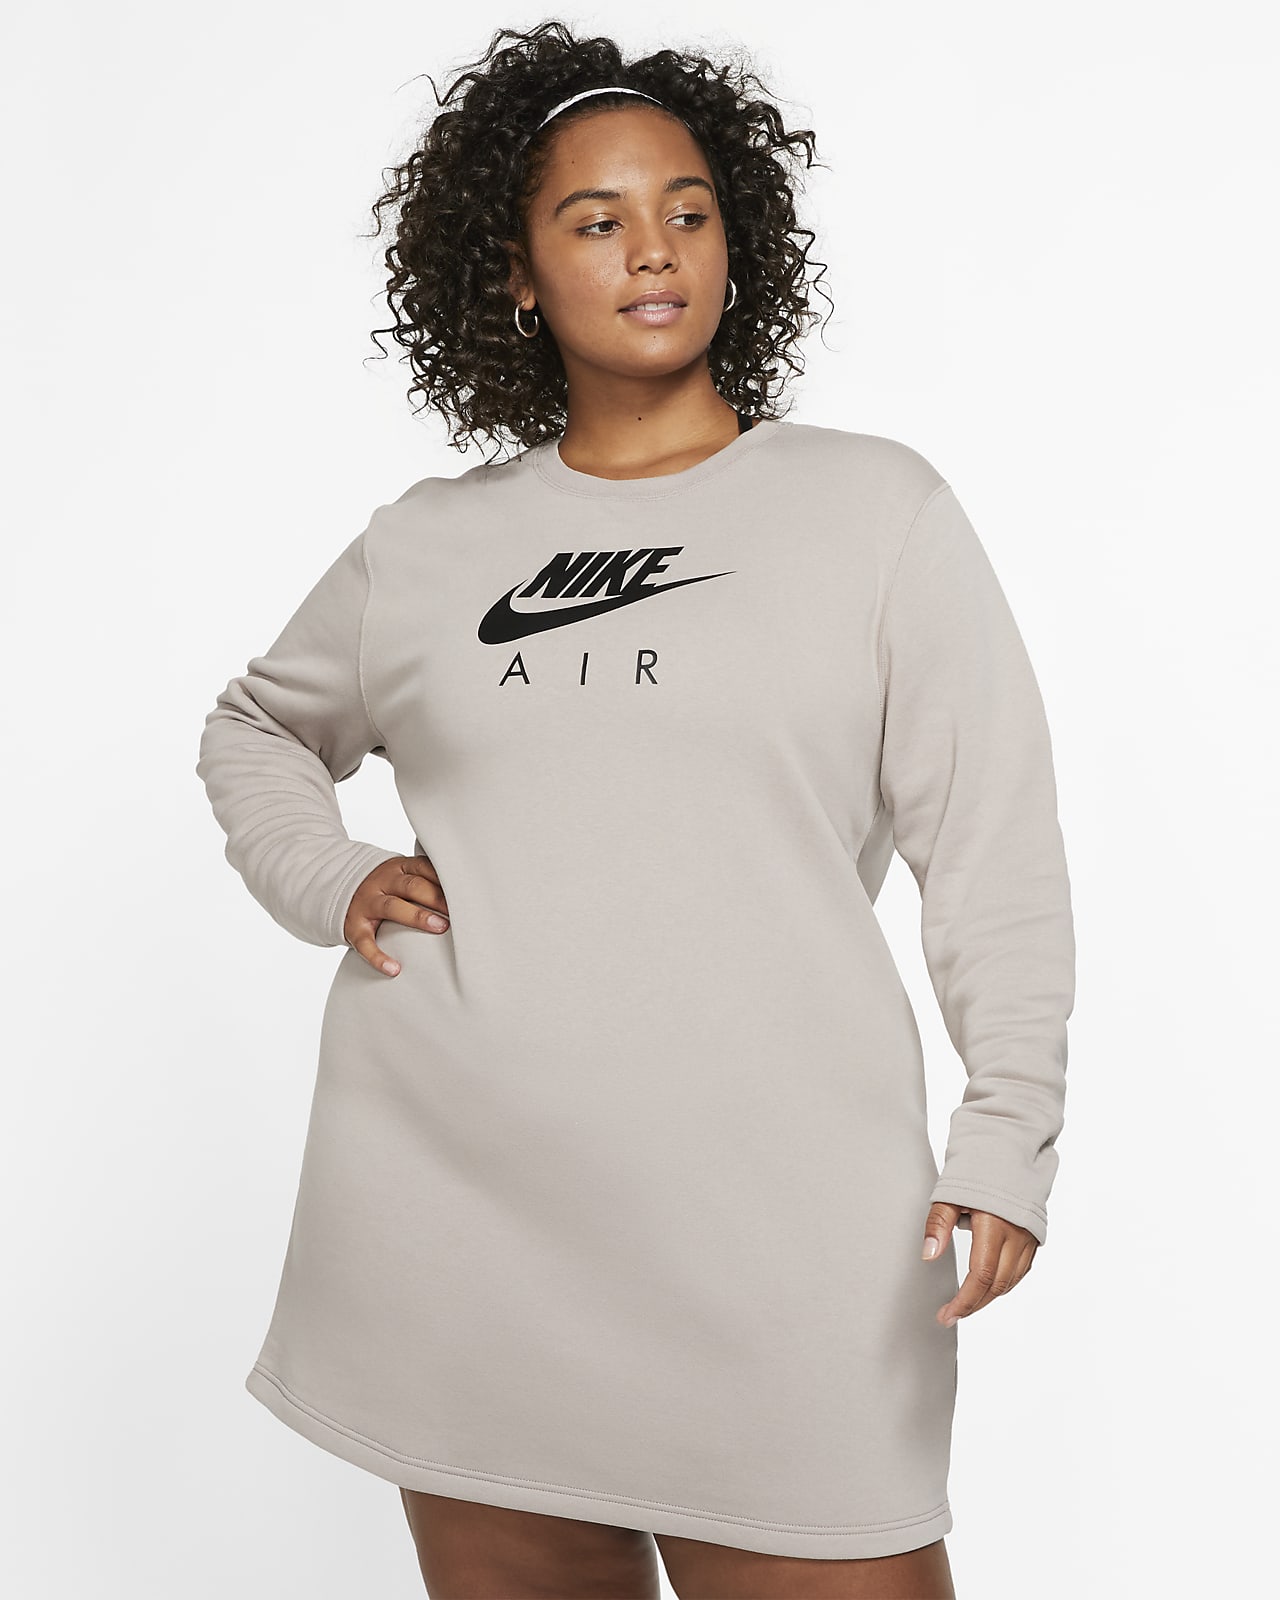 size women's apparel Shop Nike Clothing 